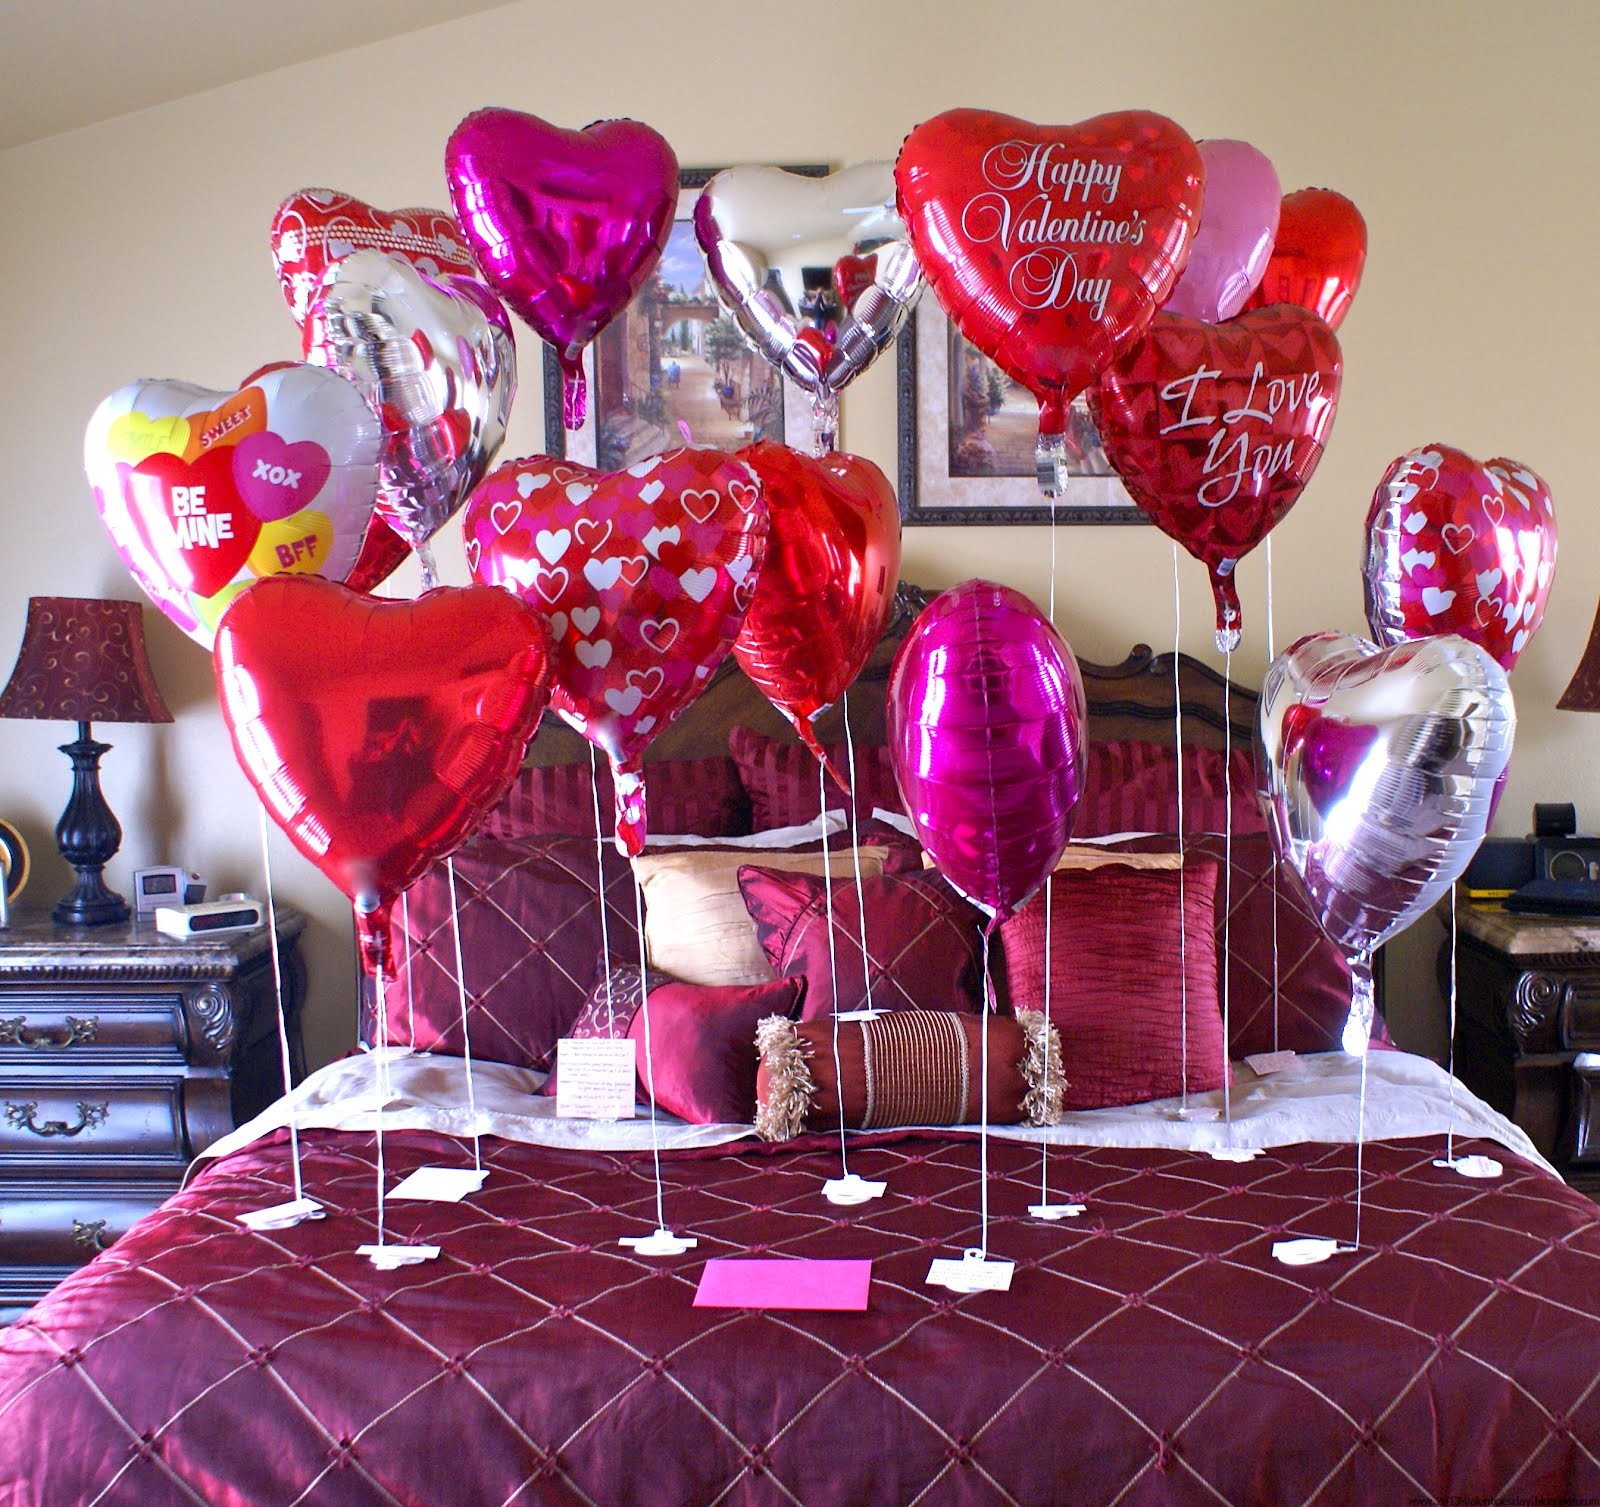 15. Valentine's Day Bed Decoration Ideas